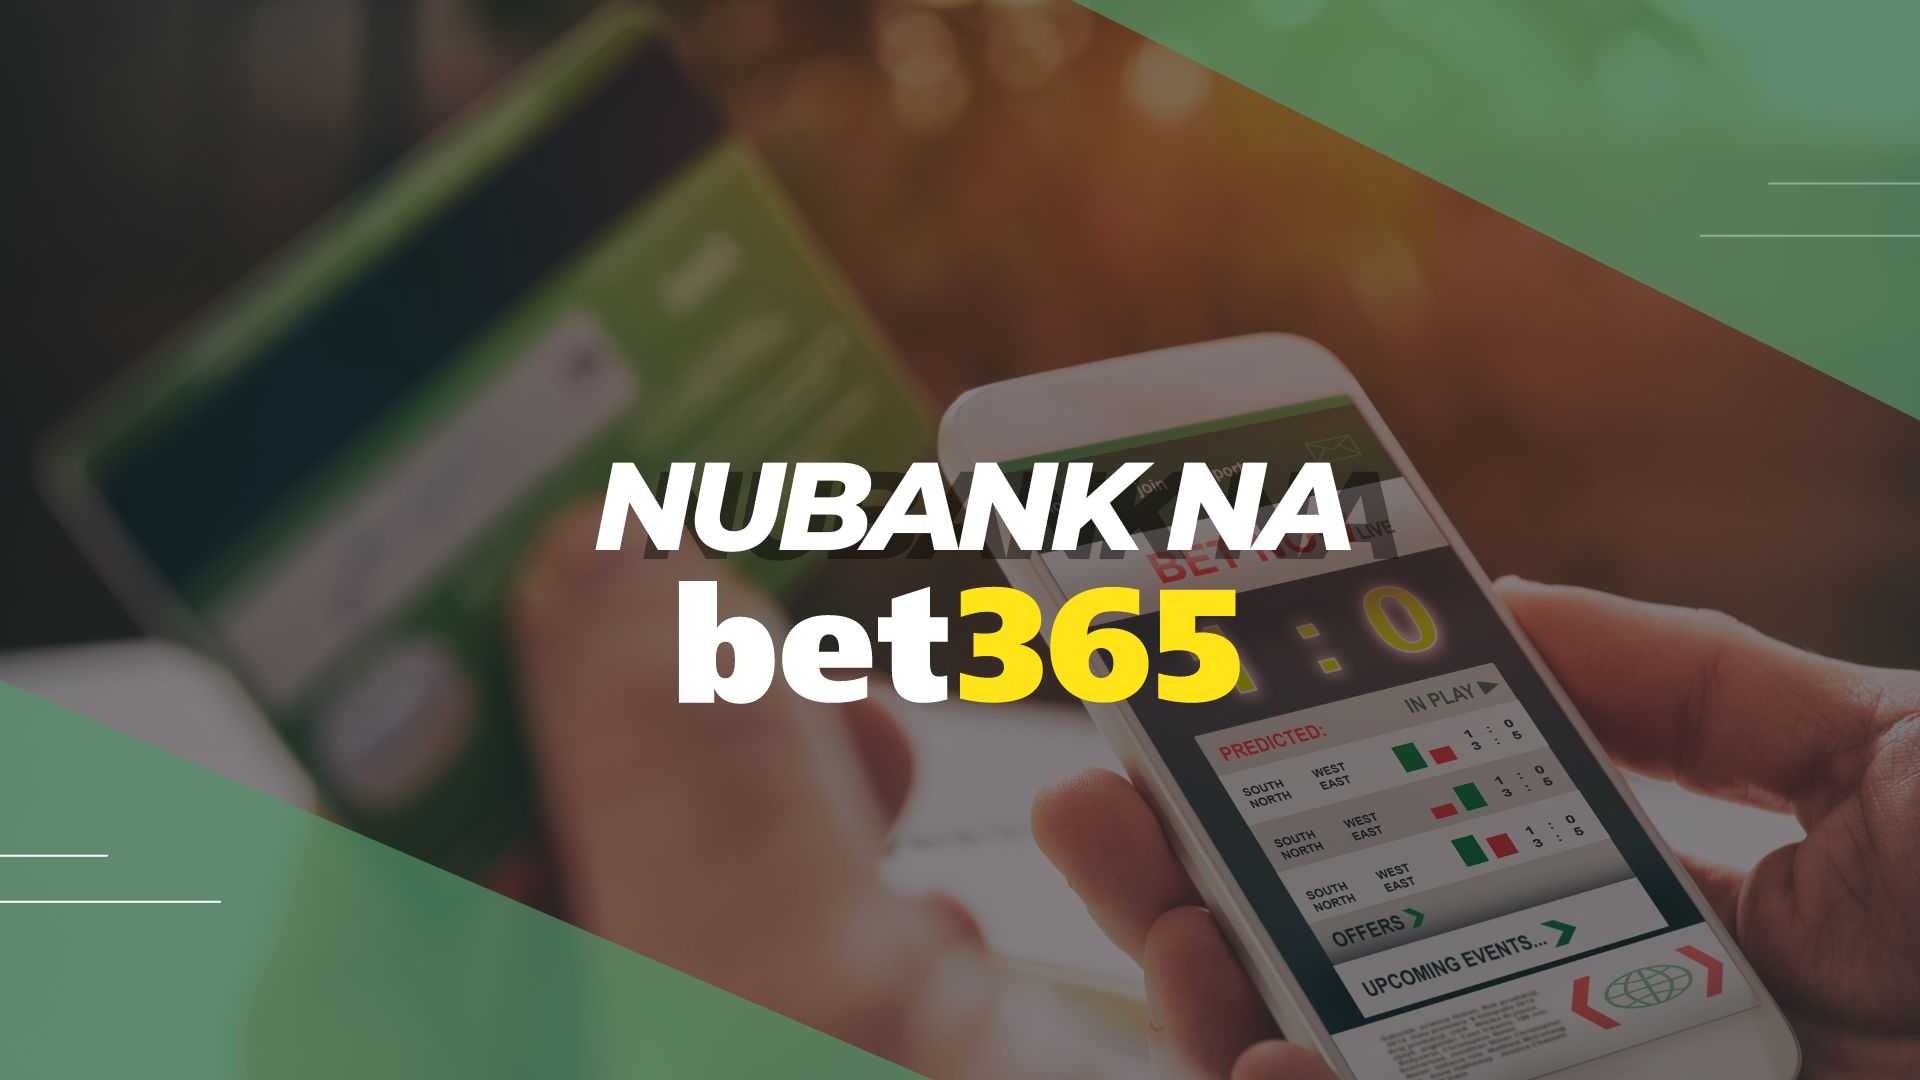 bet365 Nubank